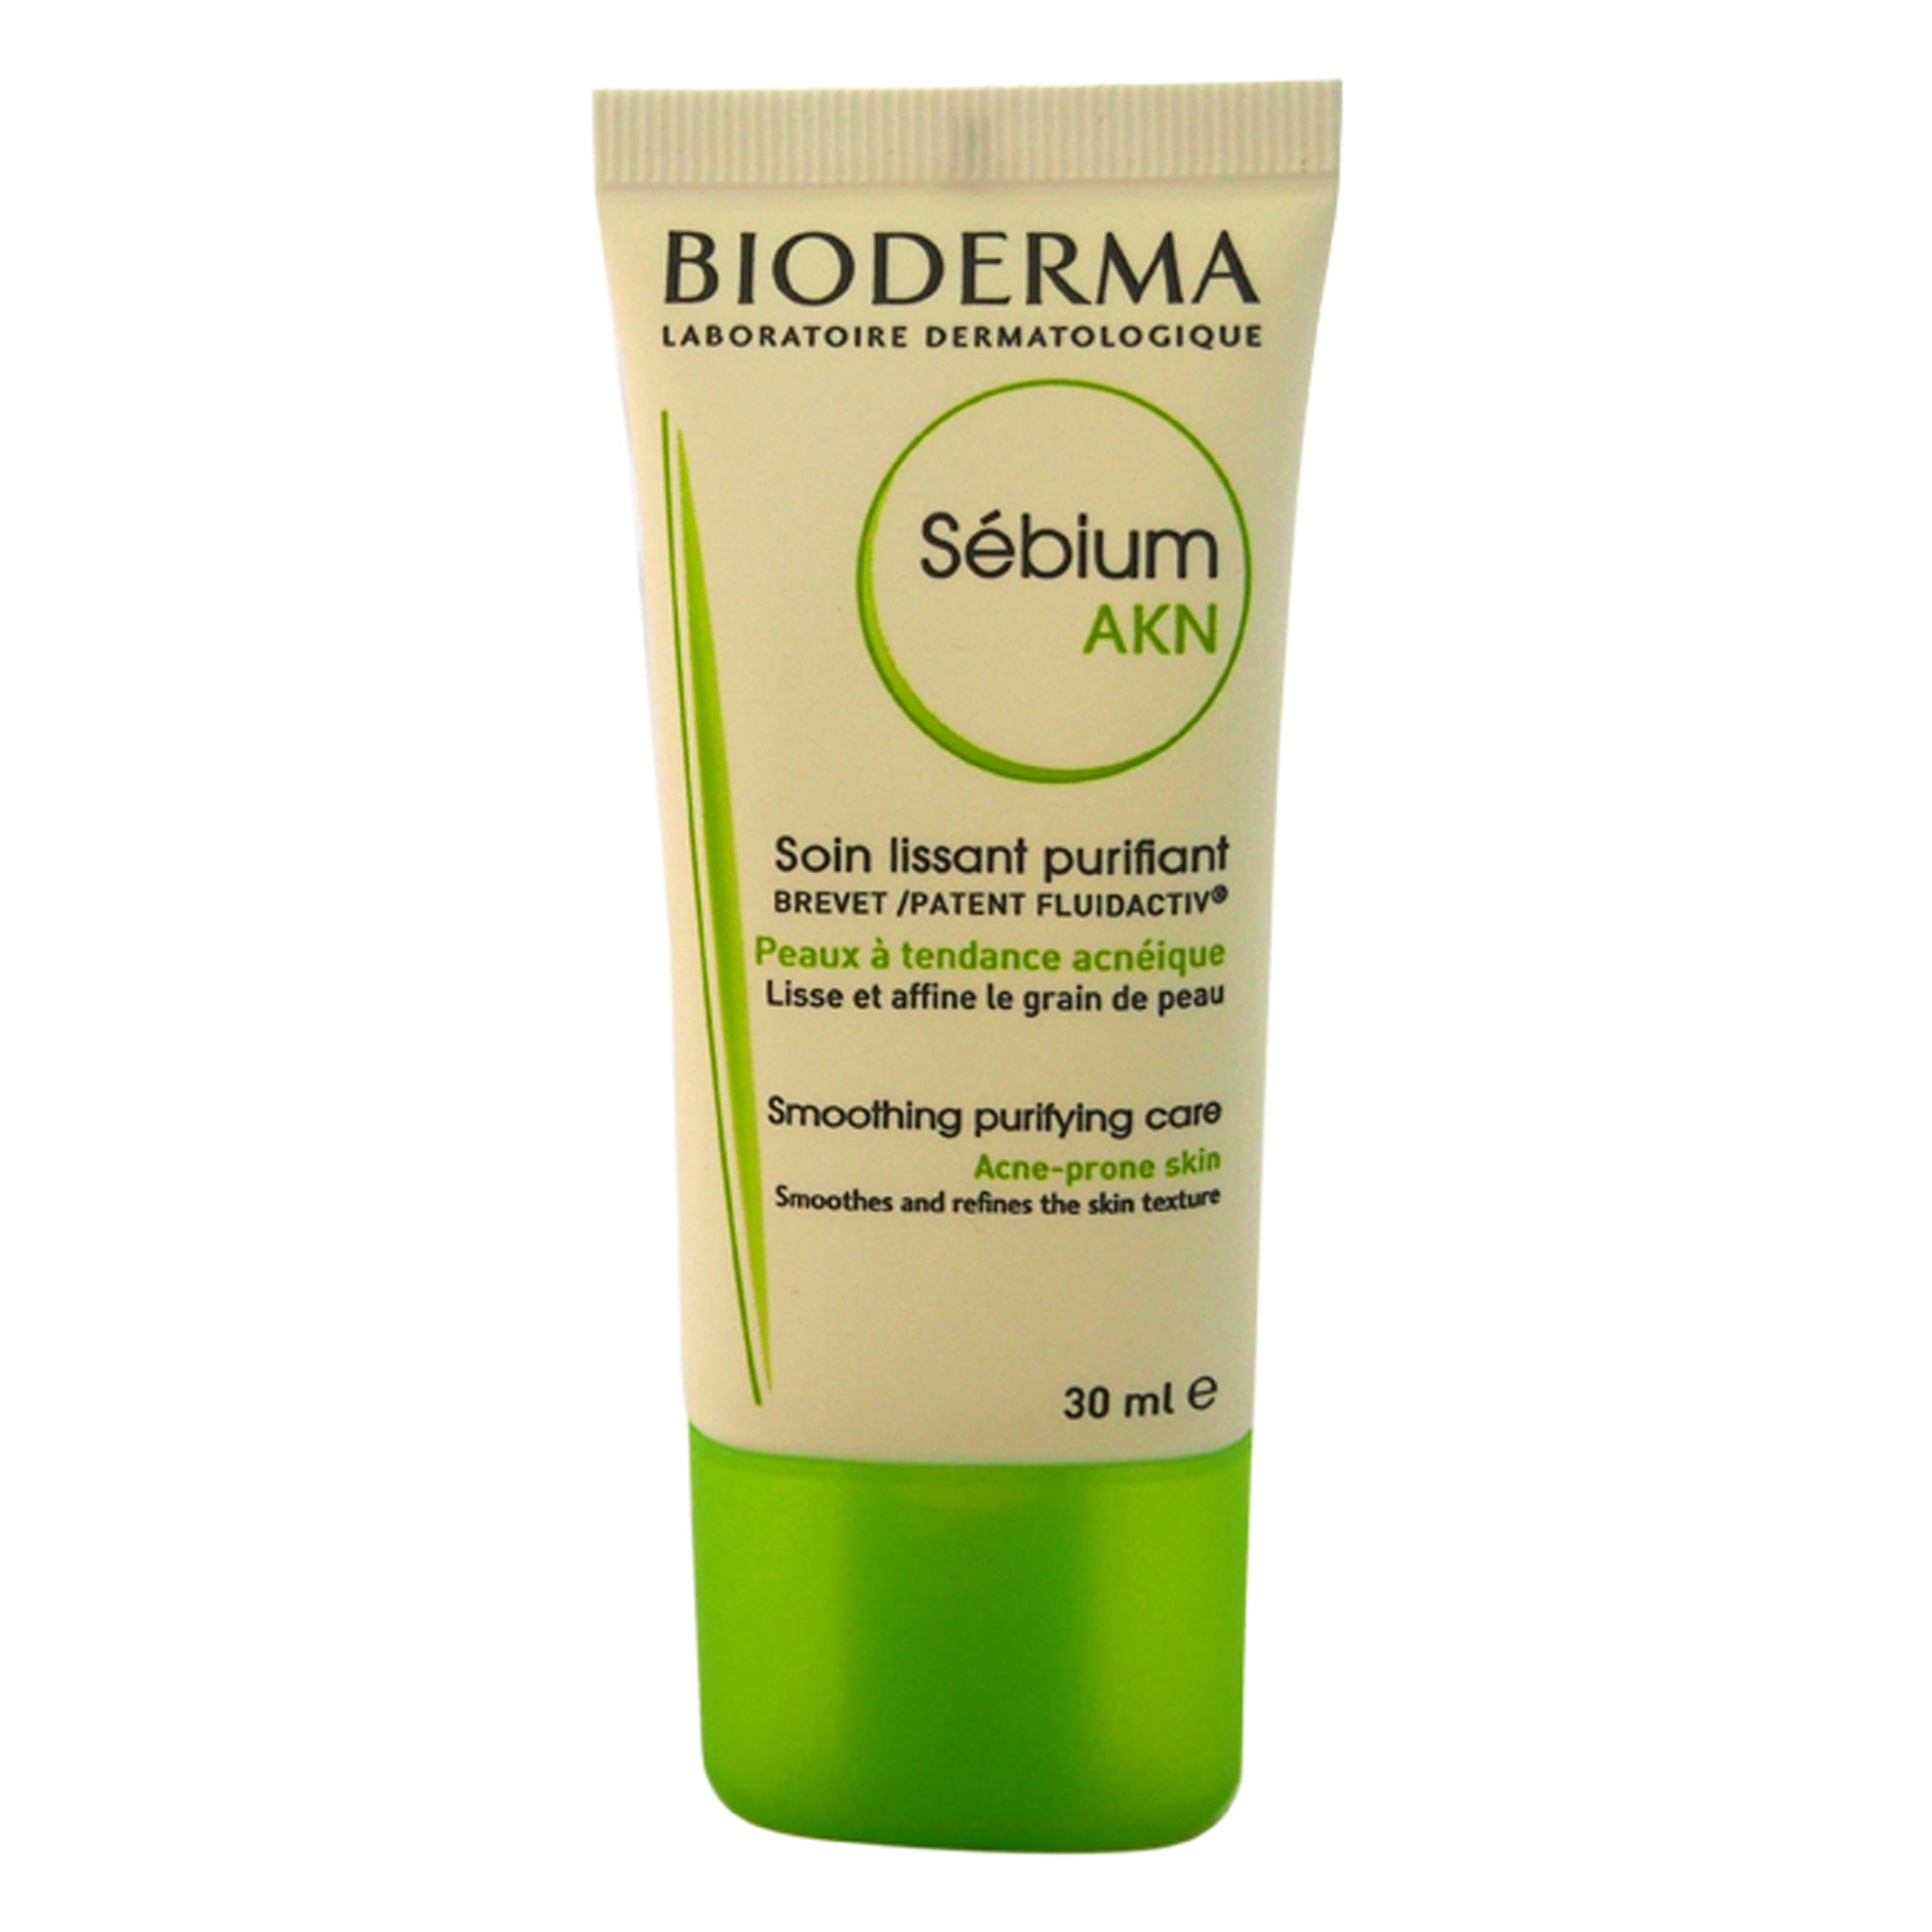 Bioderma sebium sensitive крем. Bioderma Sebium. Биодерма Себиум вся линейка. Биодерма Себиум гидра. Bioderma acne prone Skin.